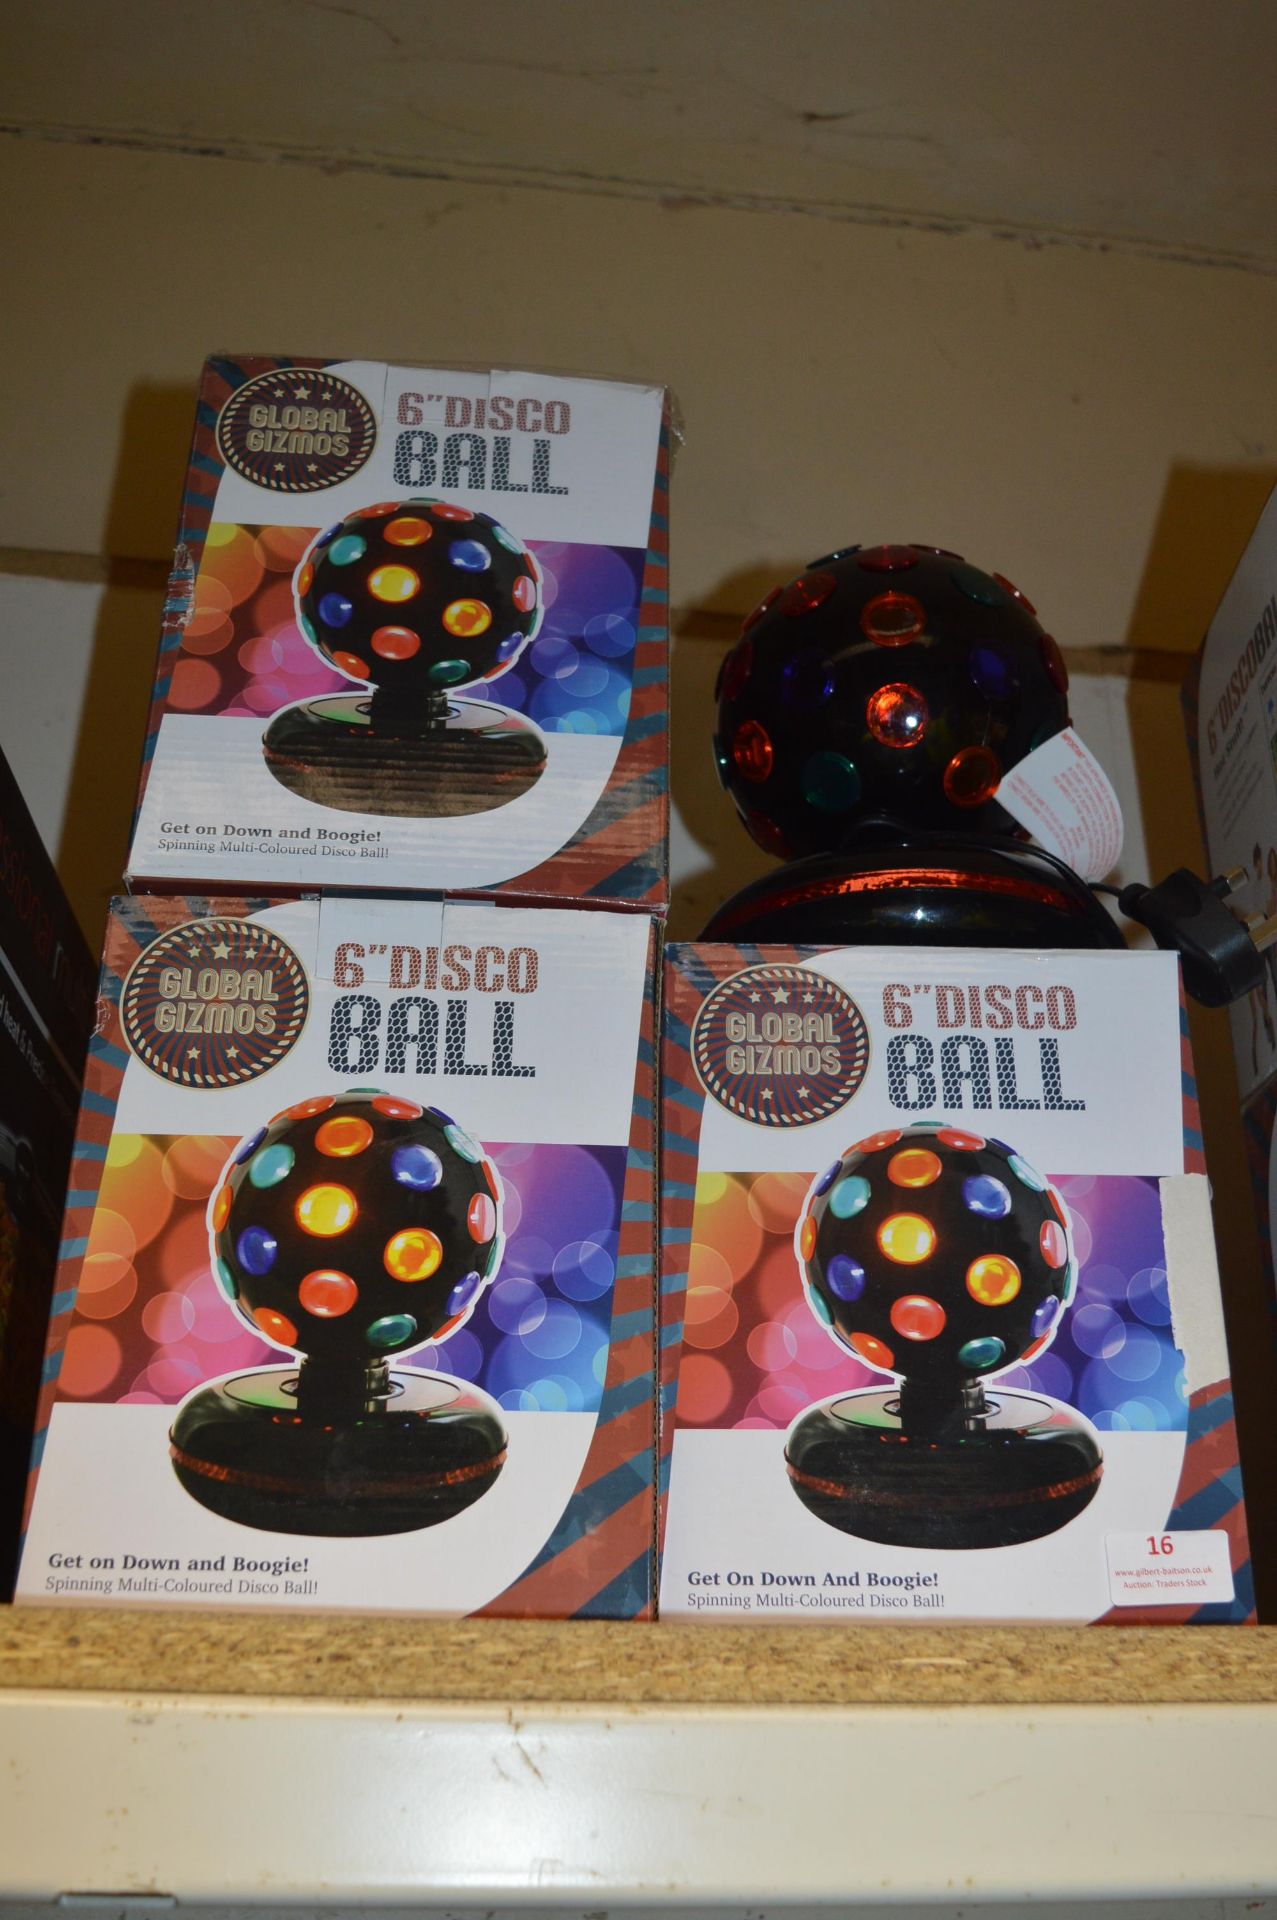 *Three Global Gizmos 6" Disco Balls